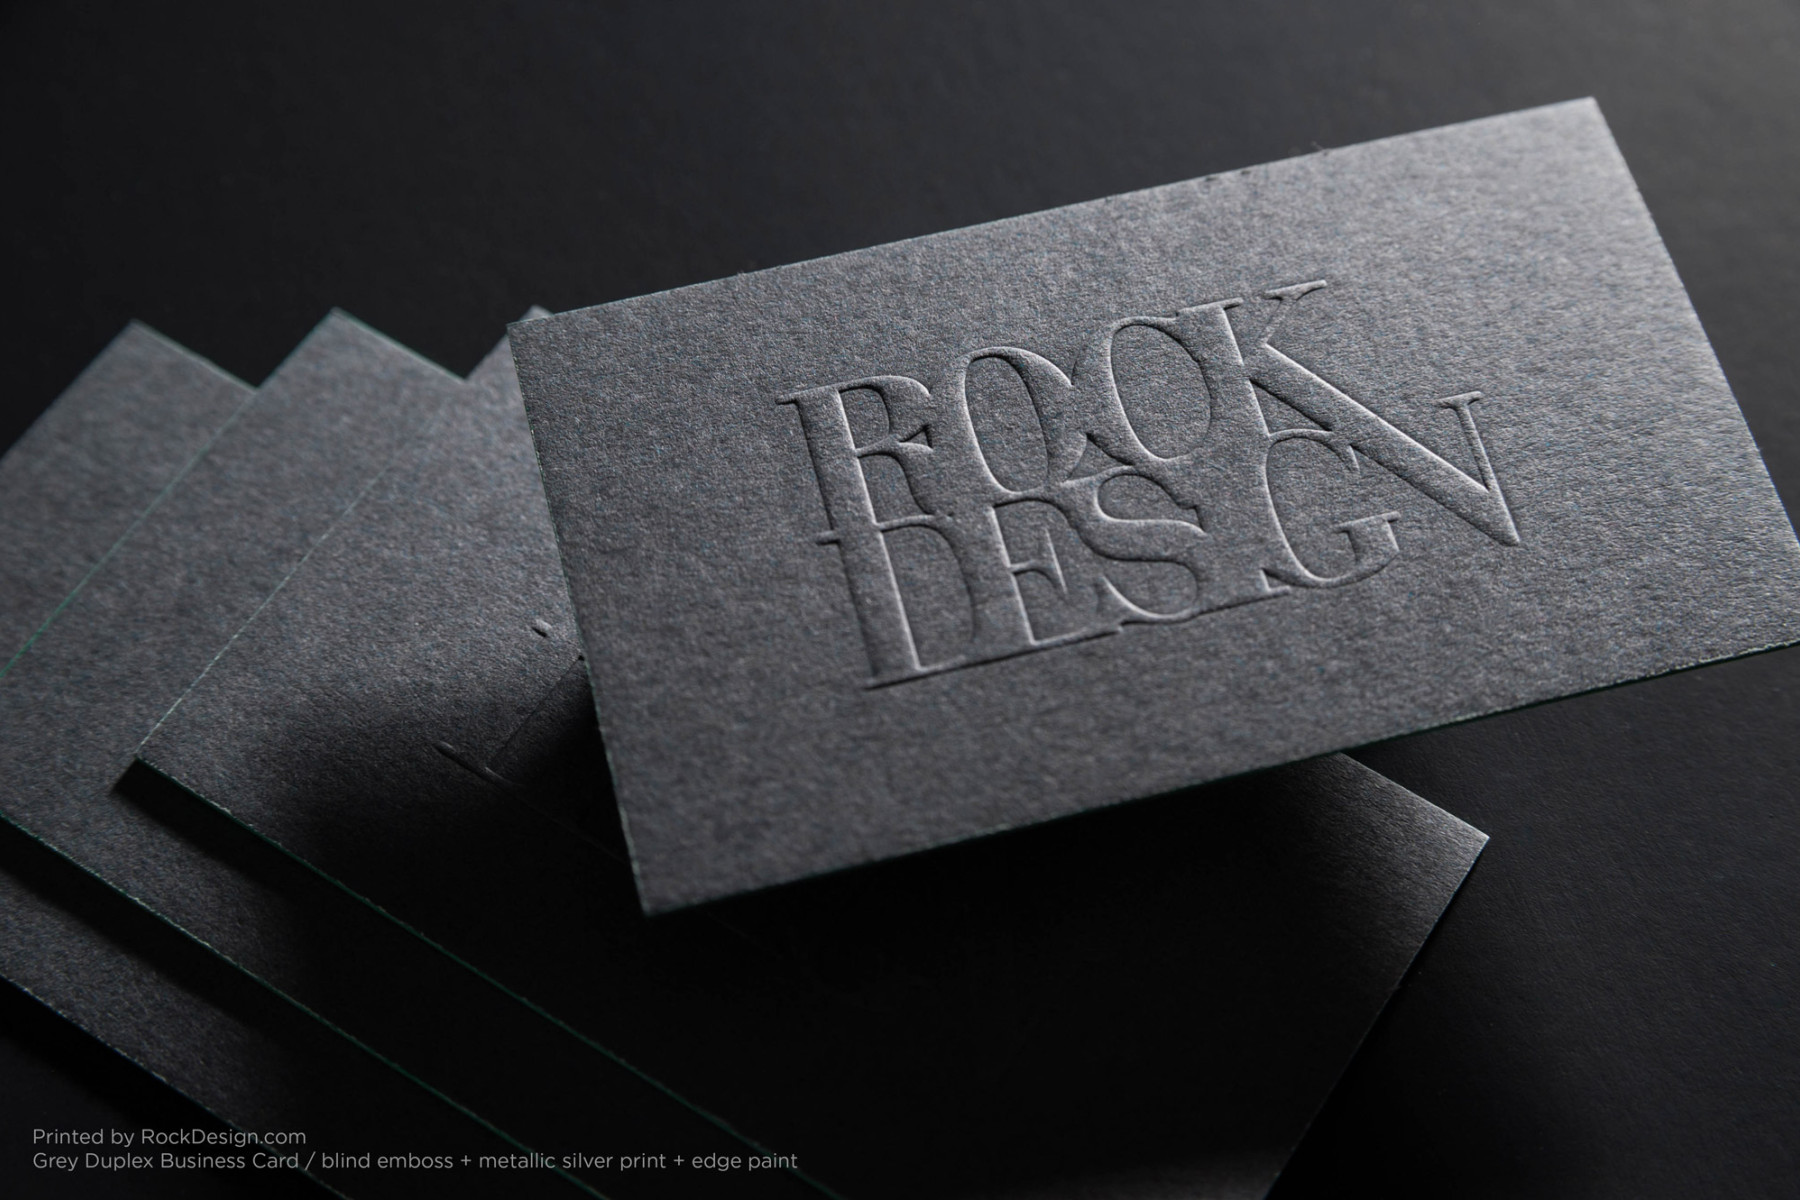 Print embossed business cards ONLINE TODAY | RockDesign.com